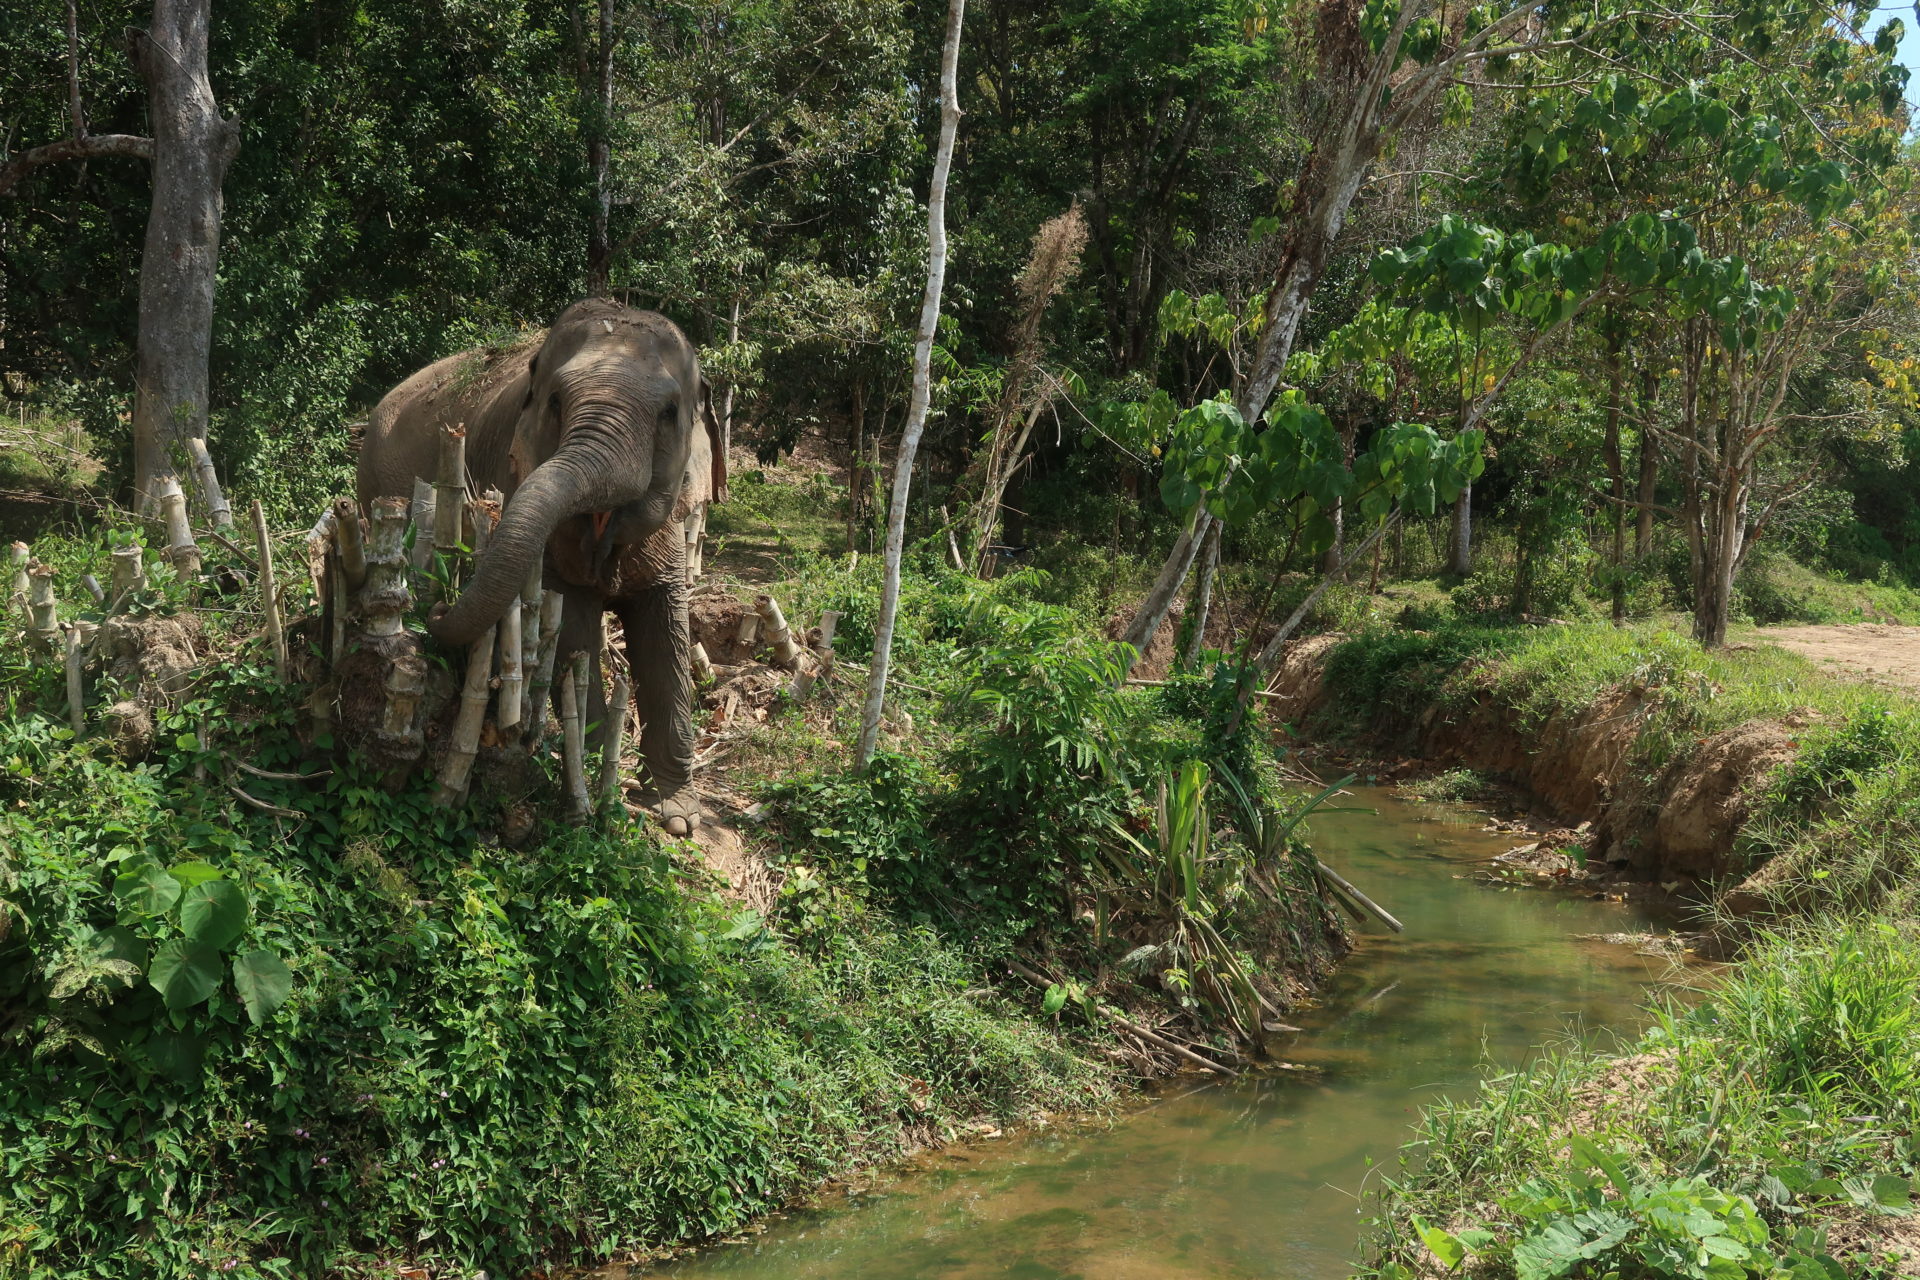 Elephant foraging